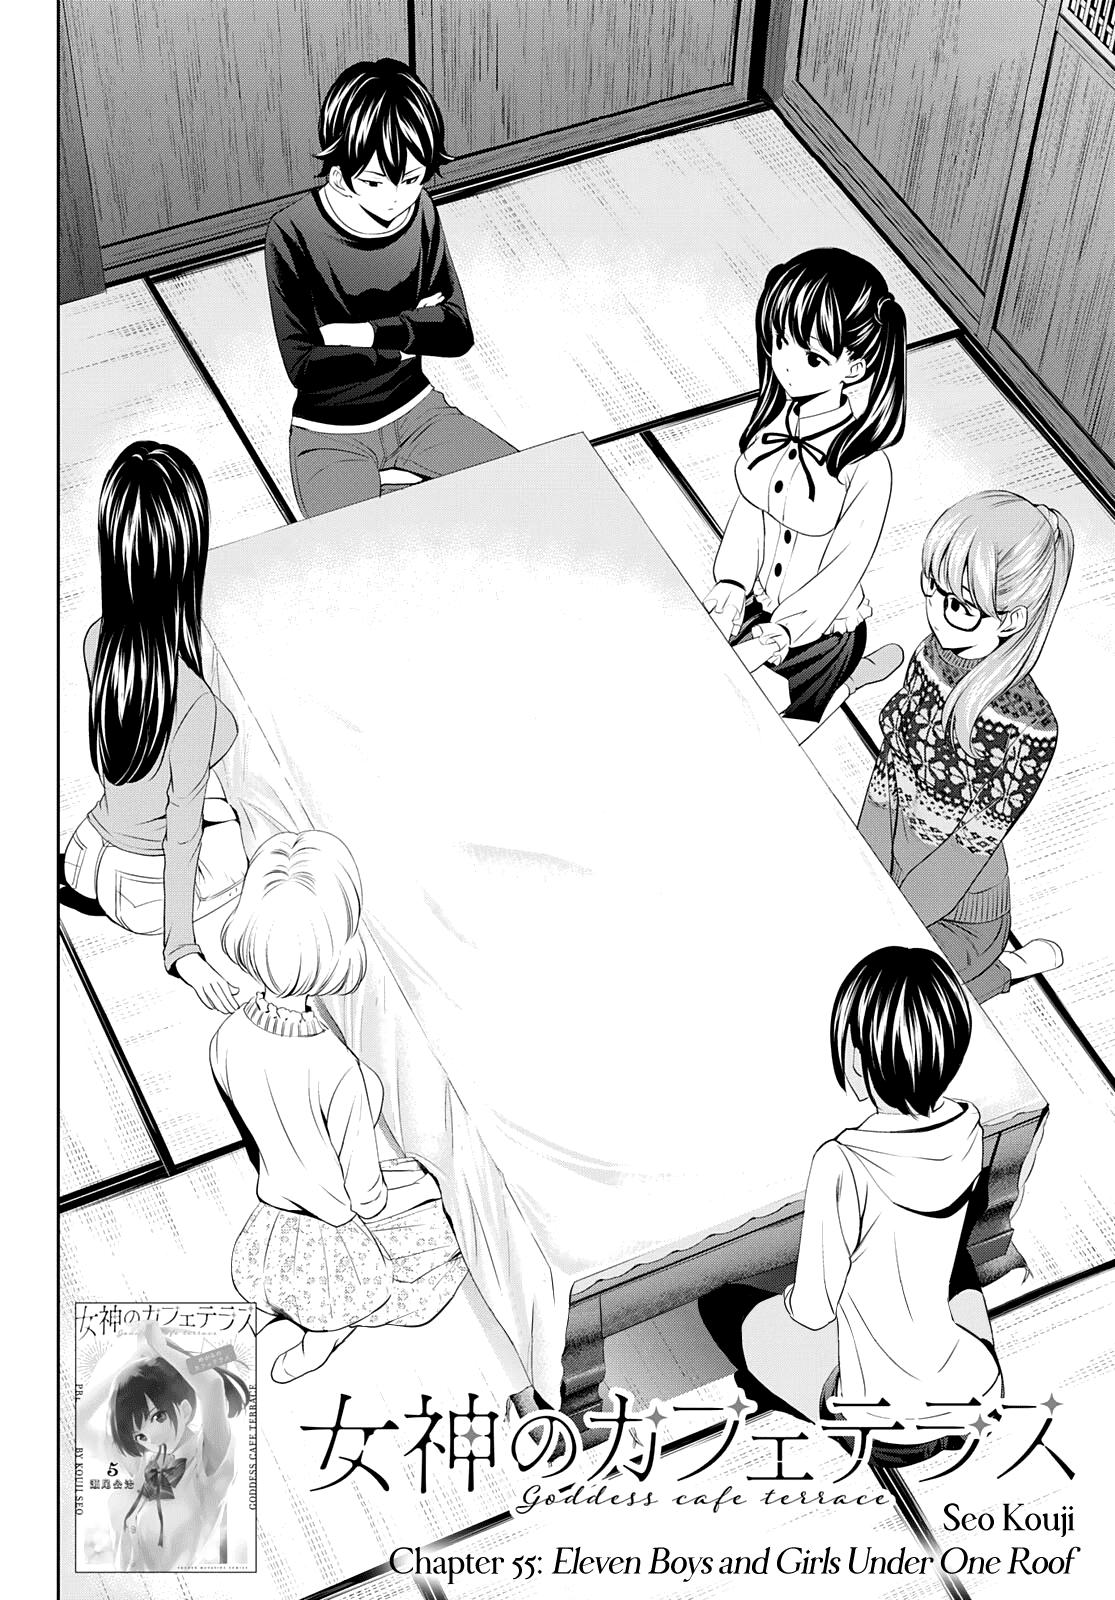 Goddess Cafe Terrace, Chapter 5 - Goddess Cafe Terrace Manga Online